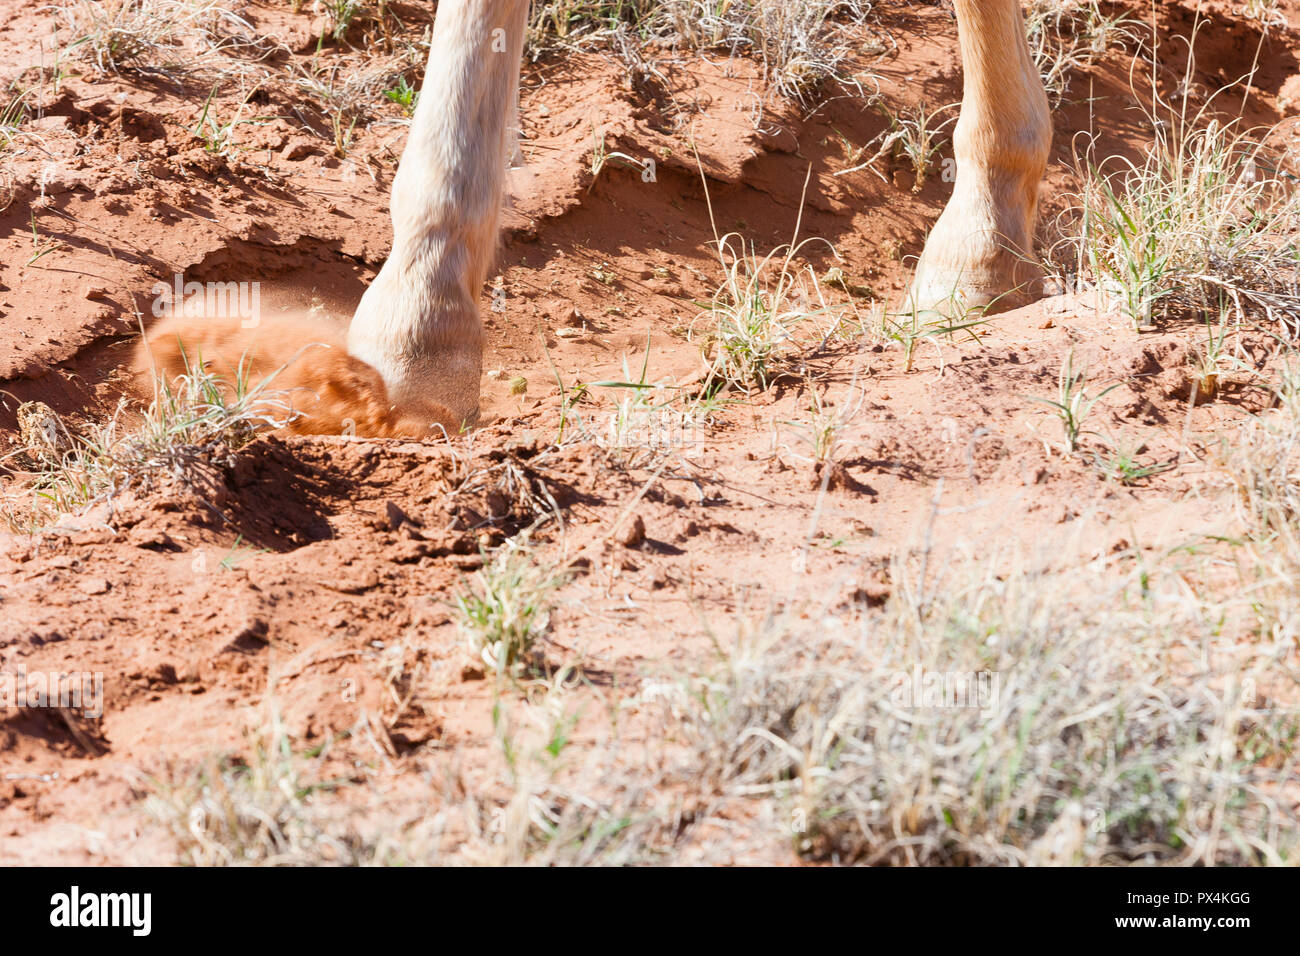 Arizona, USA. Close up of horse's hoof kicking up sand in the desert. Stock Photo